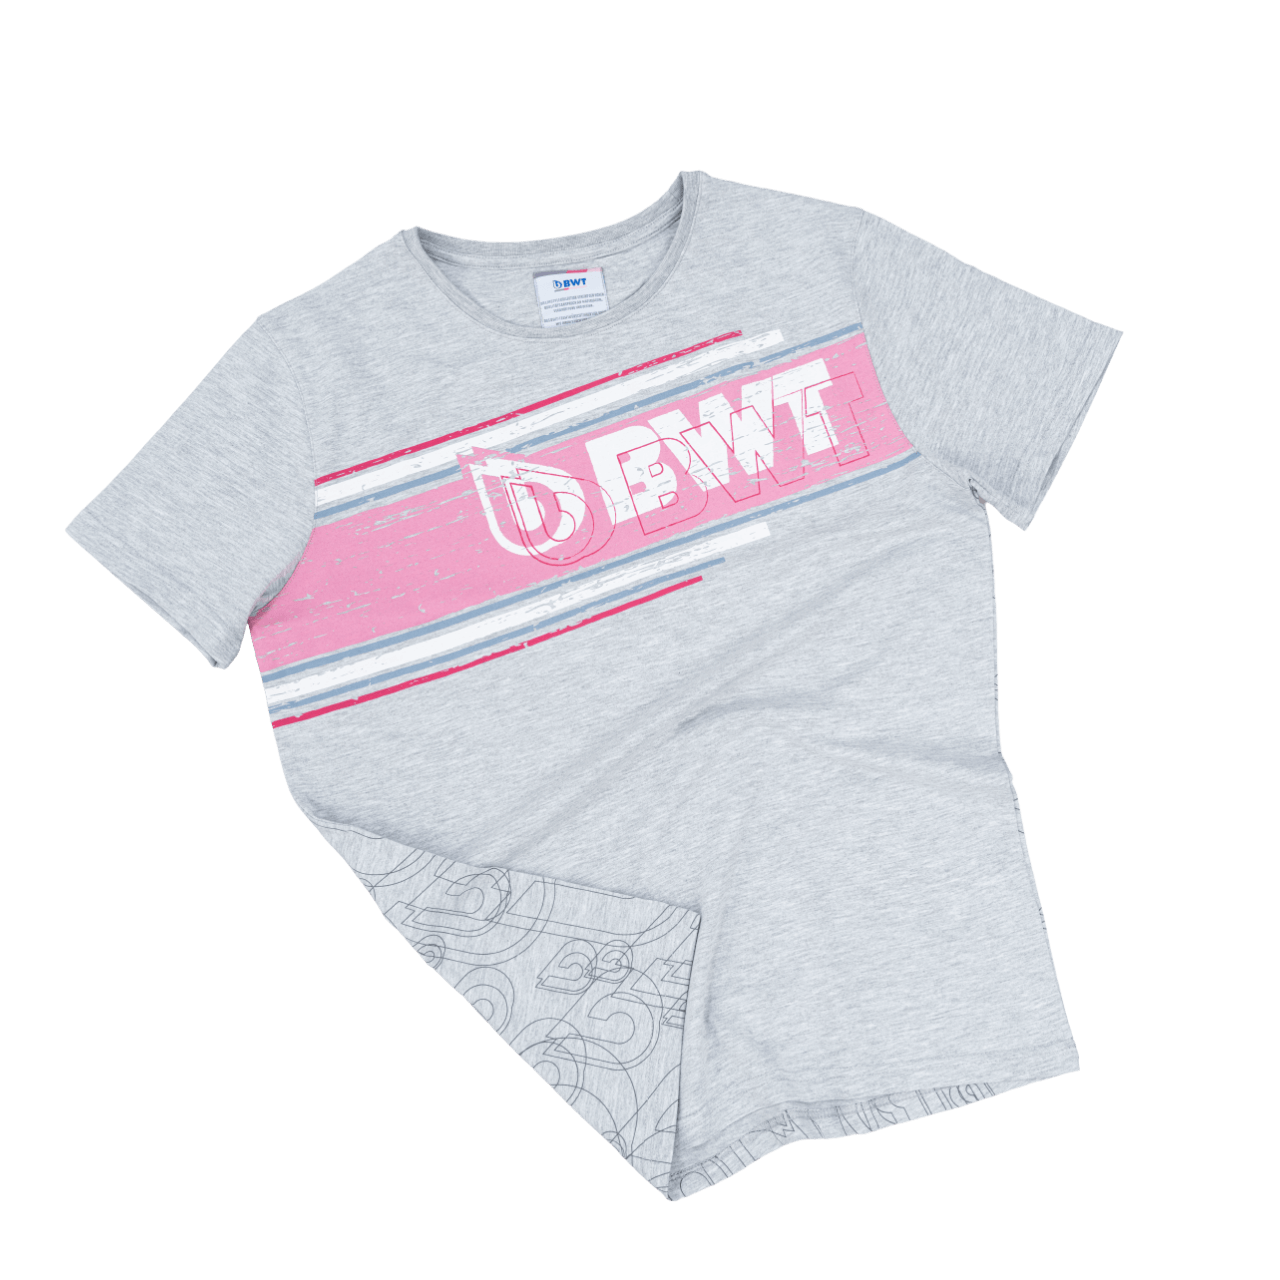 BWT Lifestyle T-shirt uomo grigio con logo BWT bianco su sfondo rosa